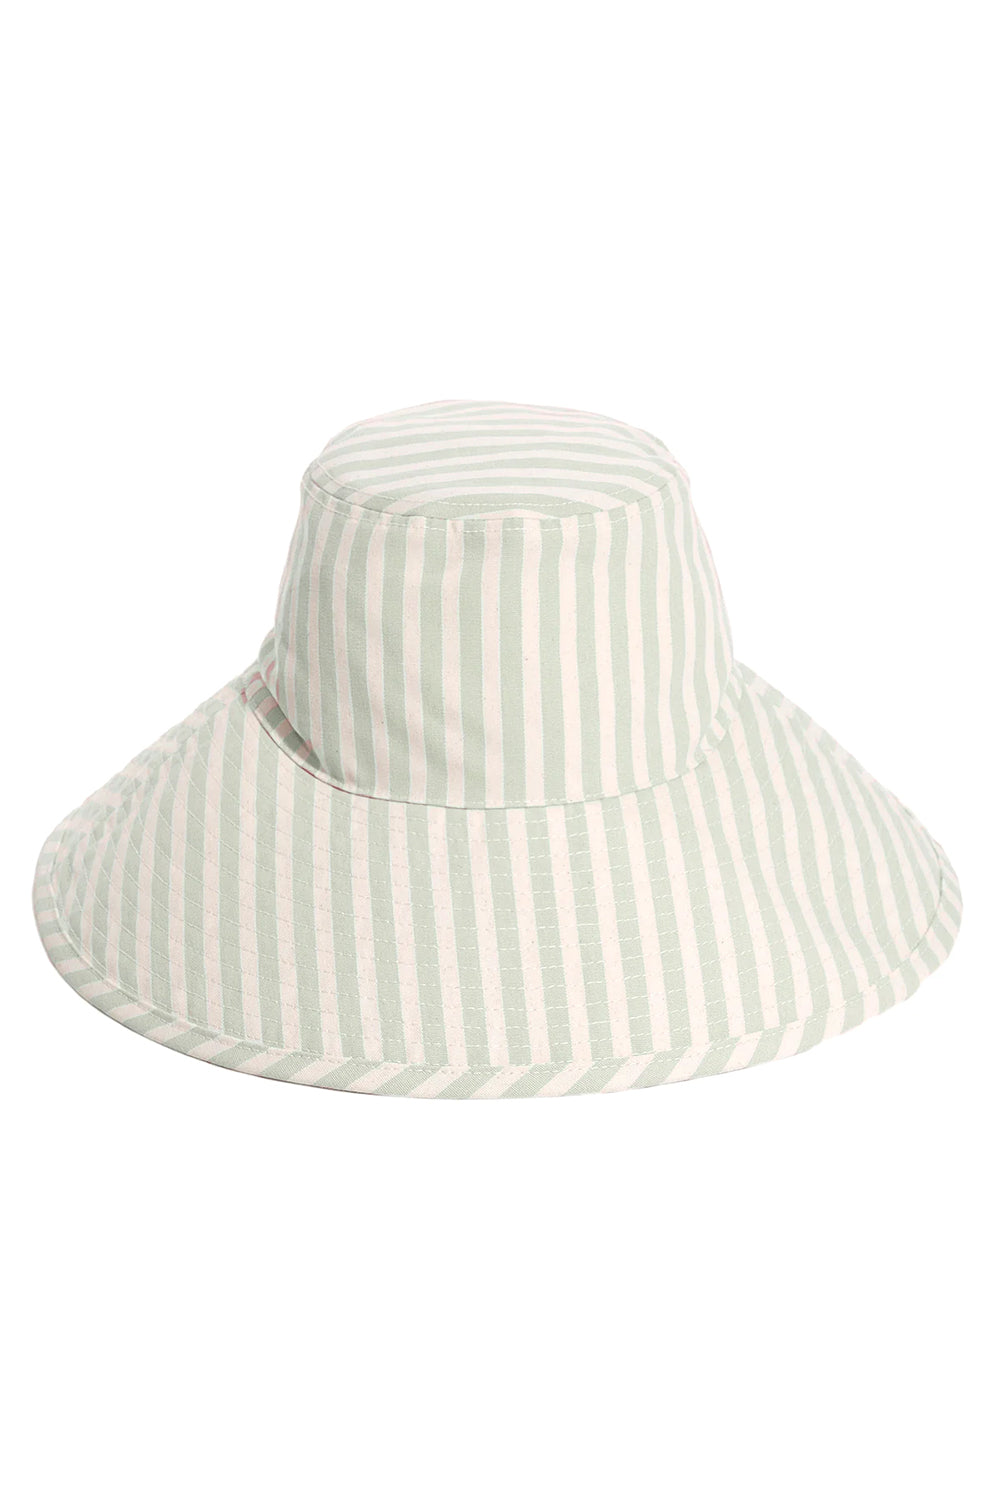 Business & Pleasure Co Wide Brim Beach Hat